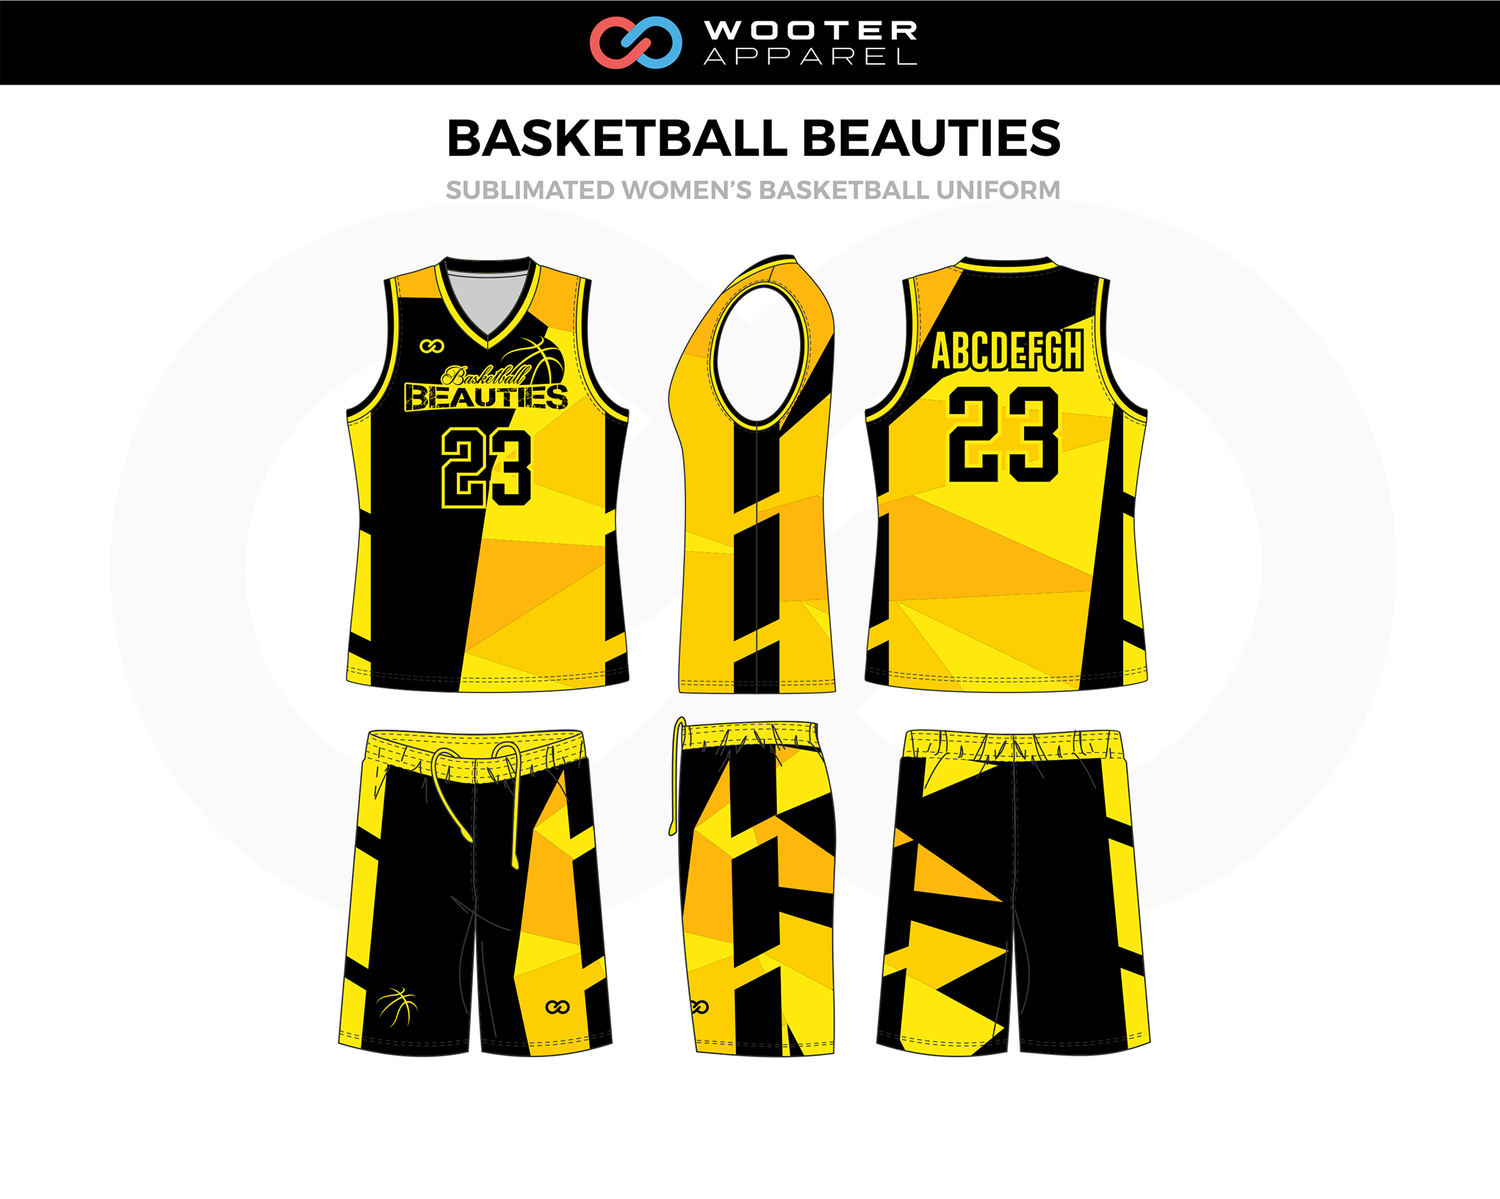 Custom Basketball Uniform Design - Basketball Beauties - Black and Yellow